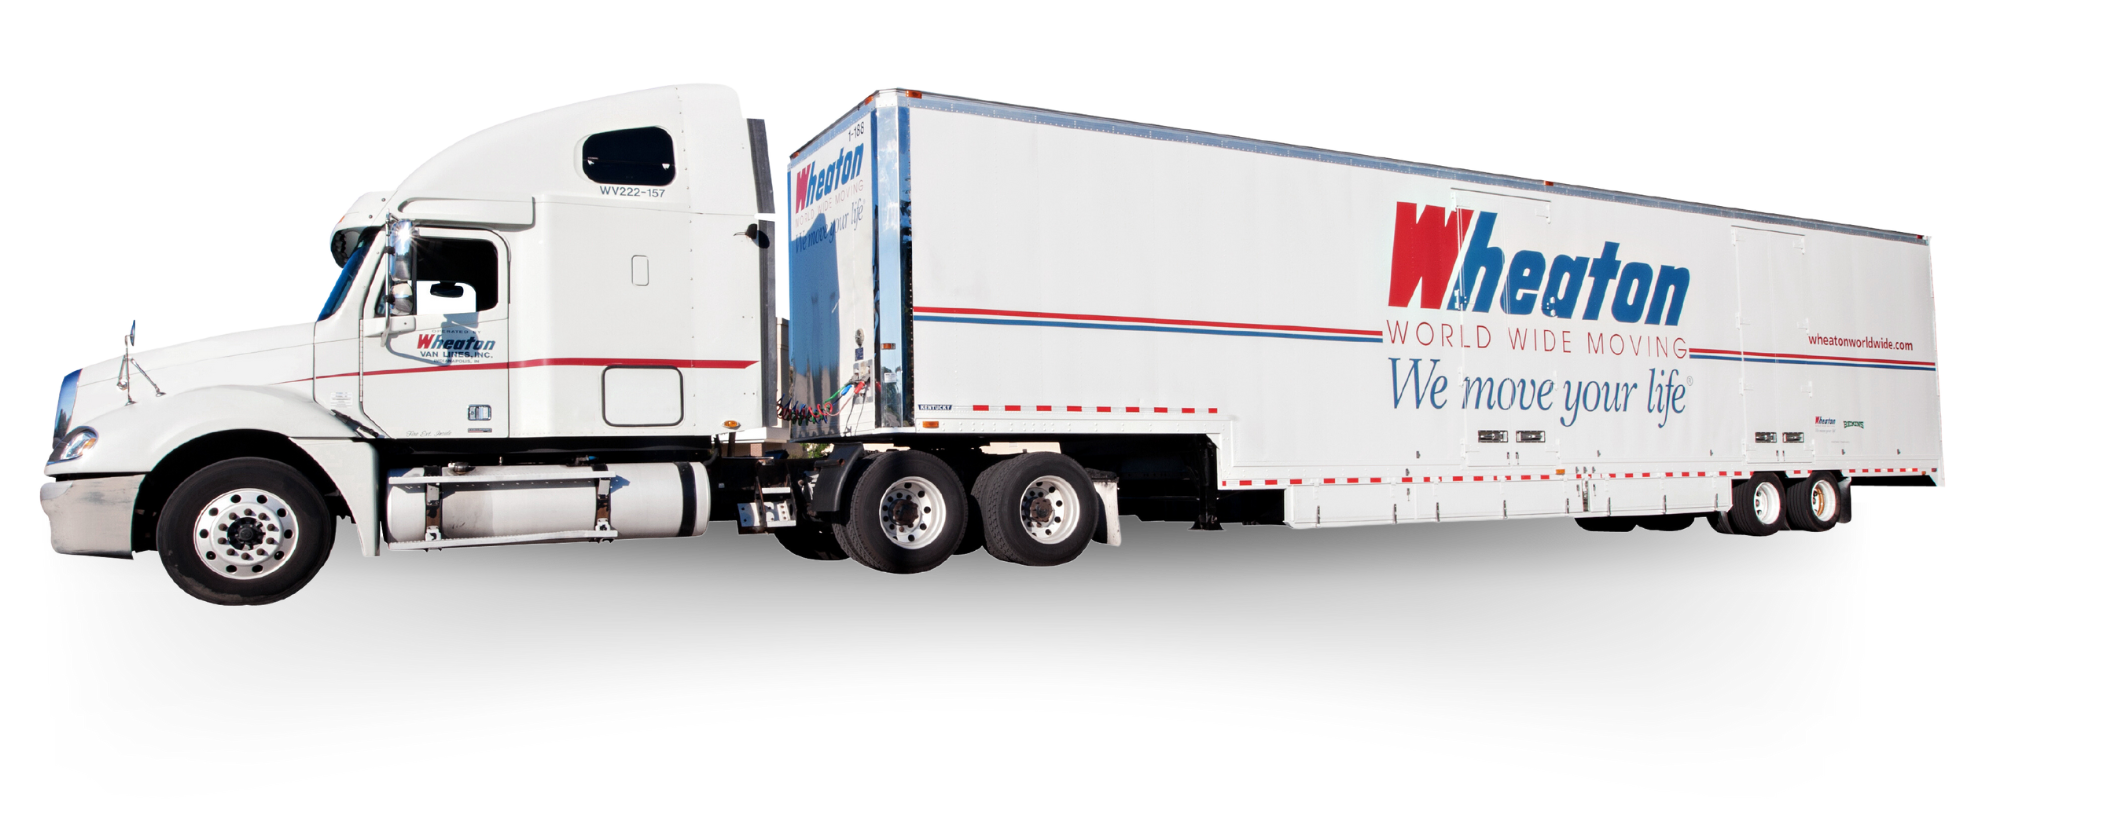 Wheaton Truck 1